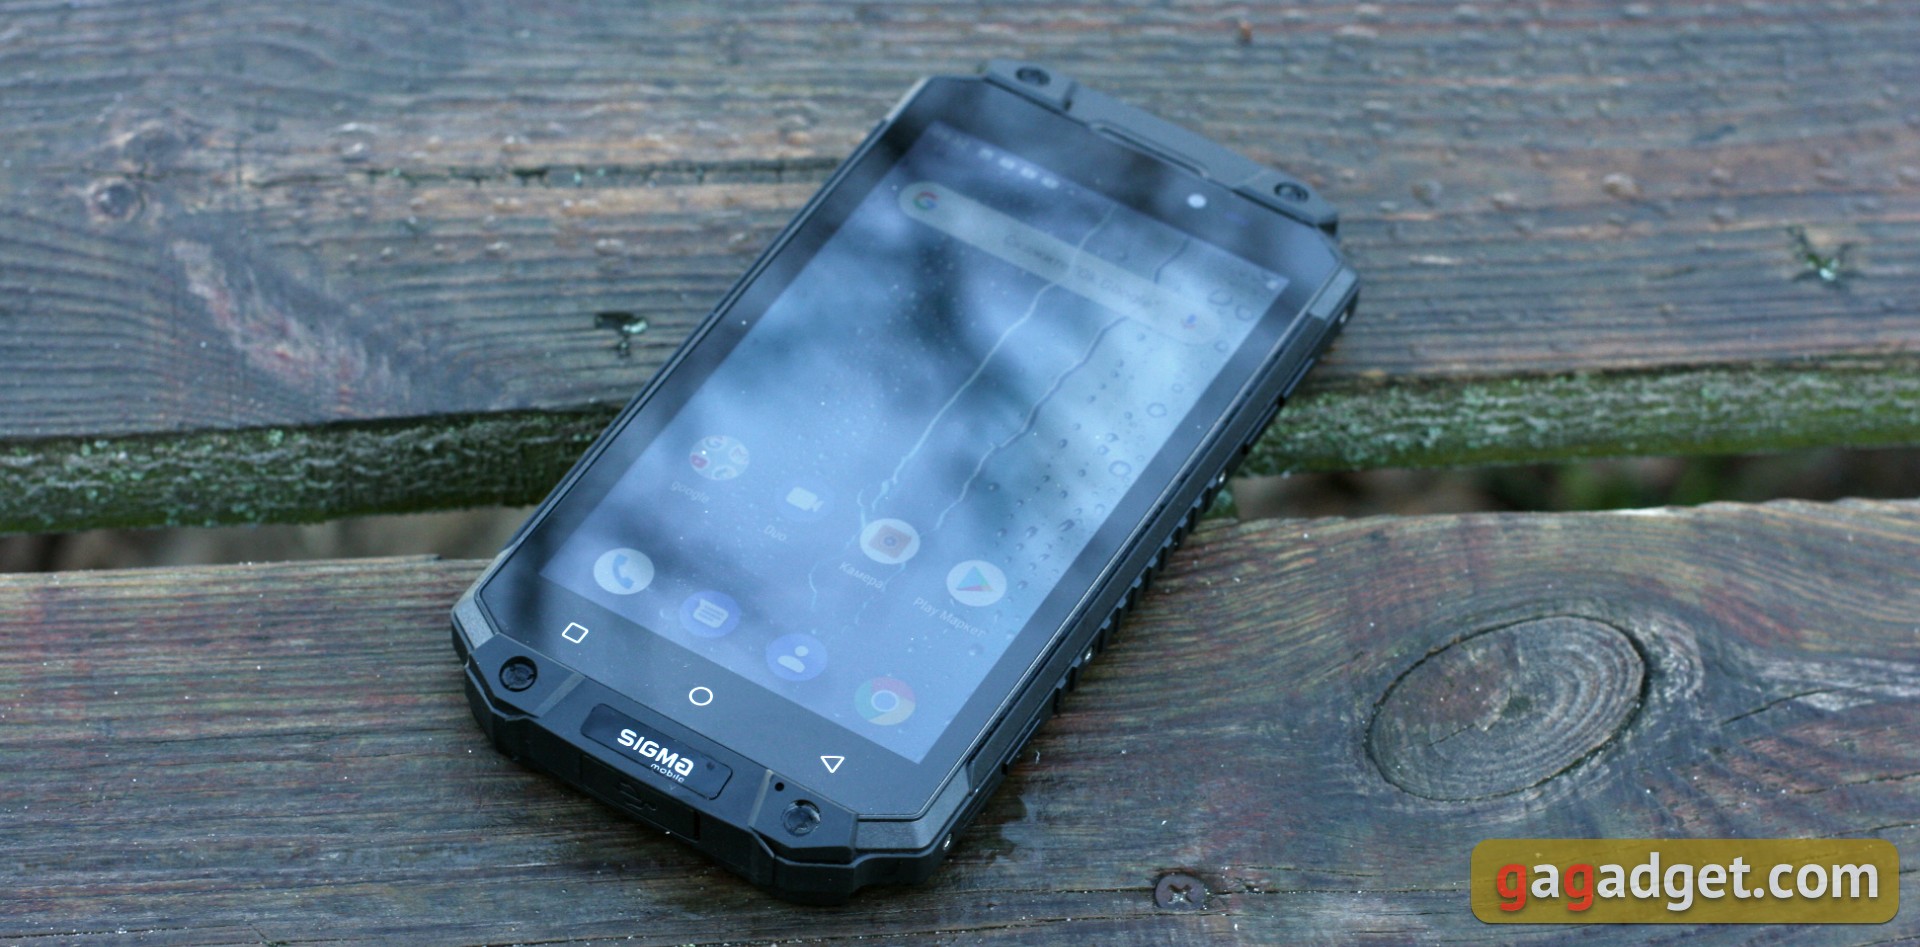 Обзор Sigma Mobile X-treme PQ39 MAX: современный защищённый батарейкофон-40